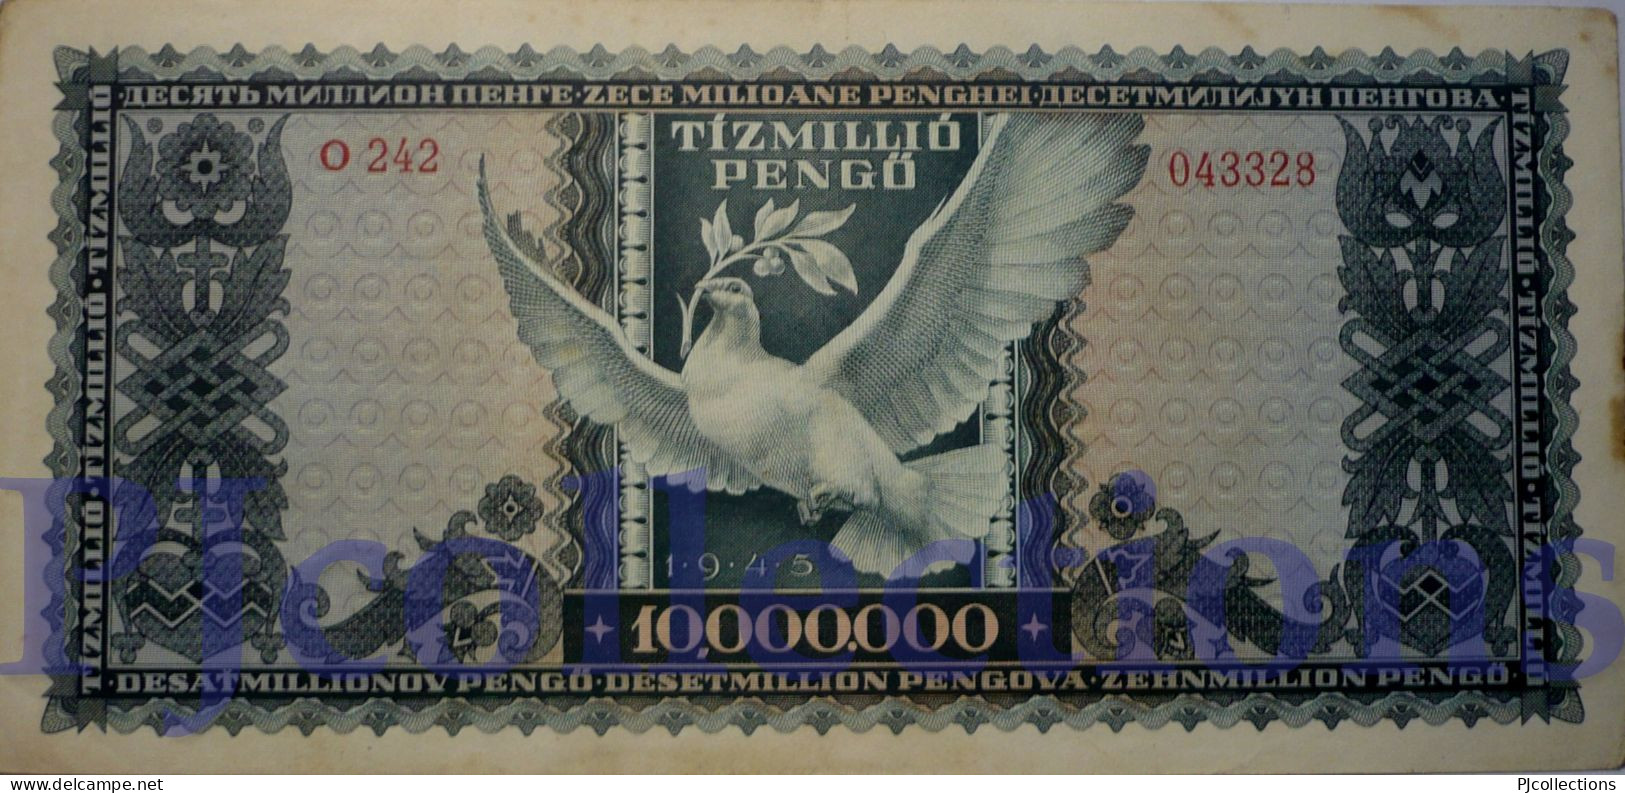 HUNGARY 10 MILLION PENGO 1945 PICK 123 AU- W/STAINS - Ungheria